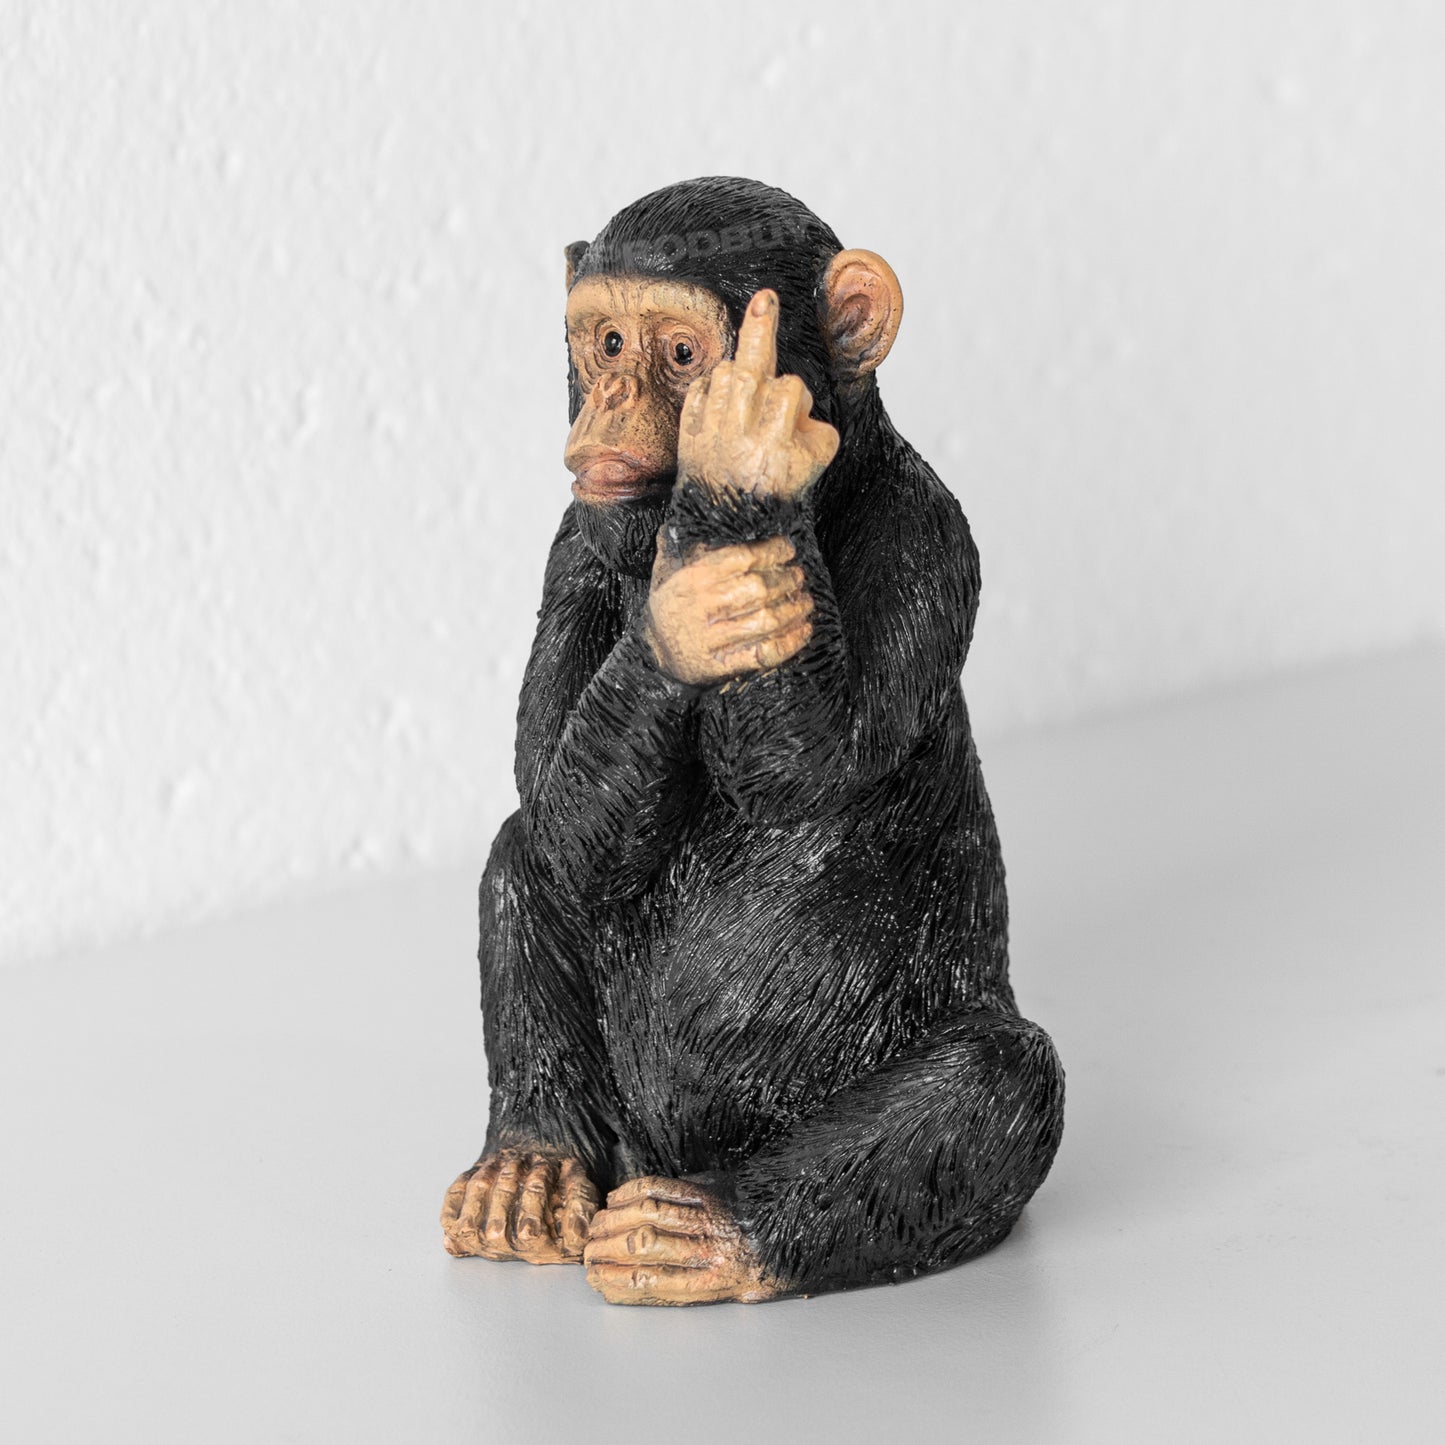 Small Black Rude Monkey Resin Ornament